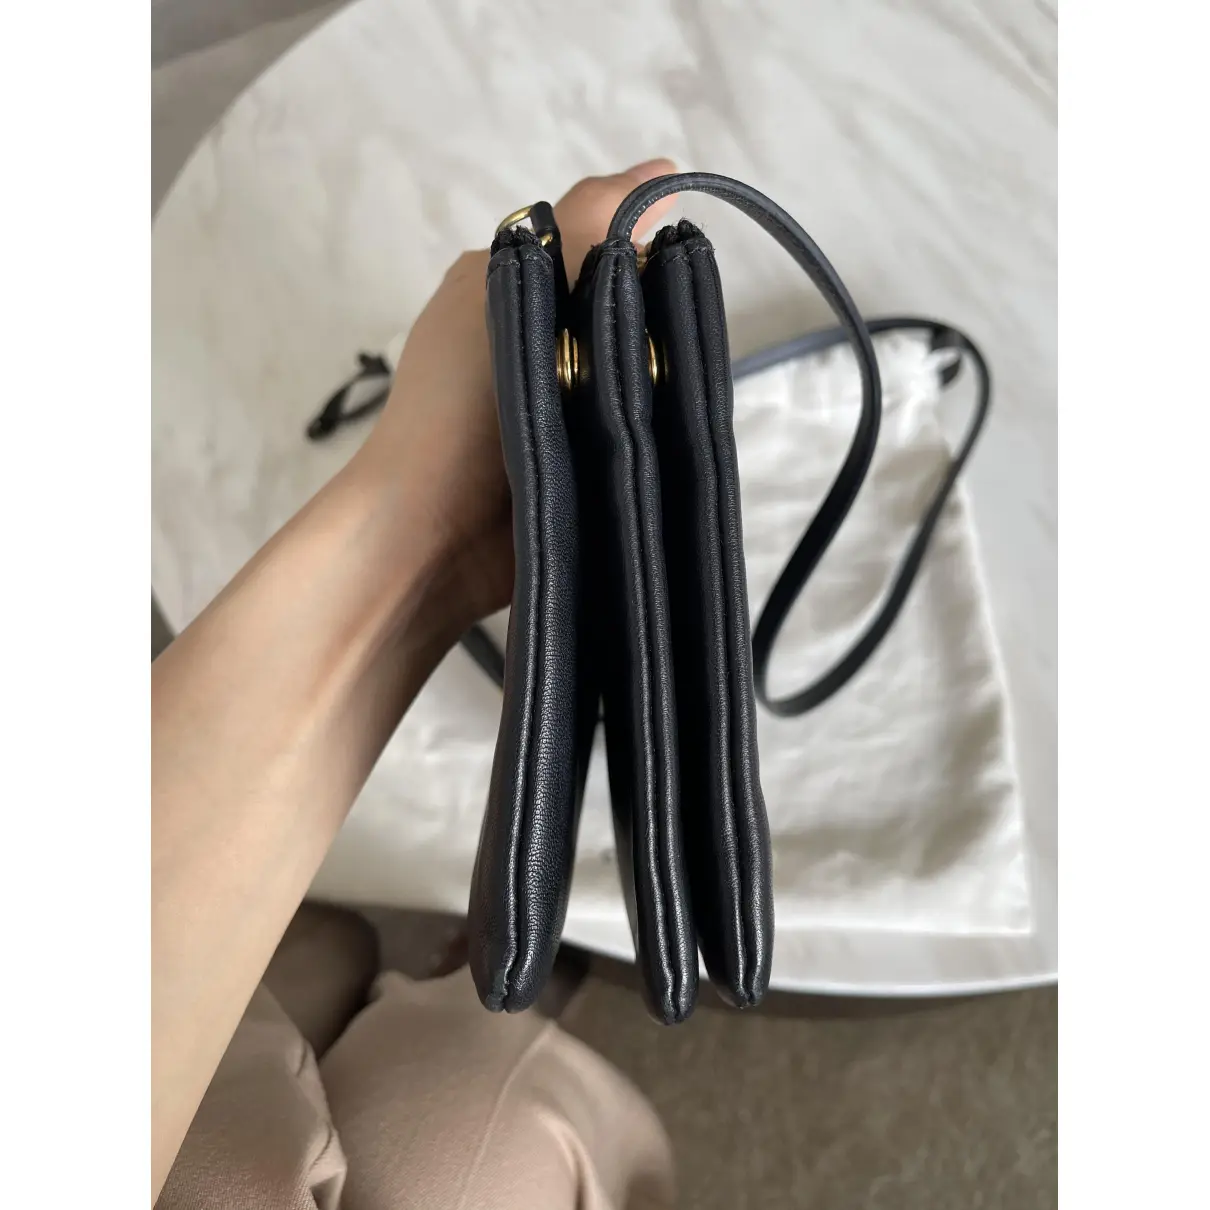 Buy Celine Trio leather bag online